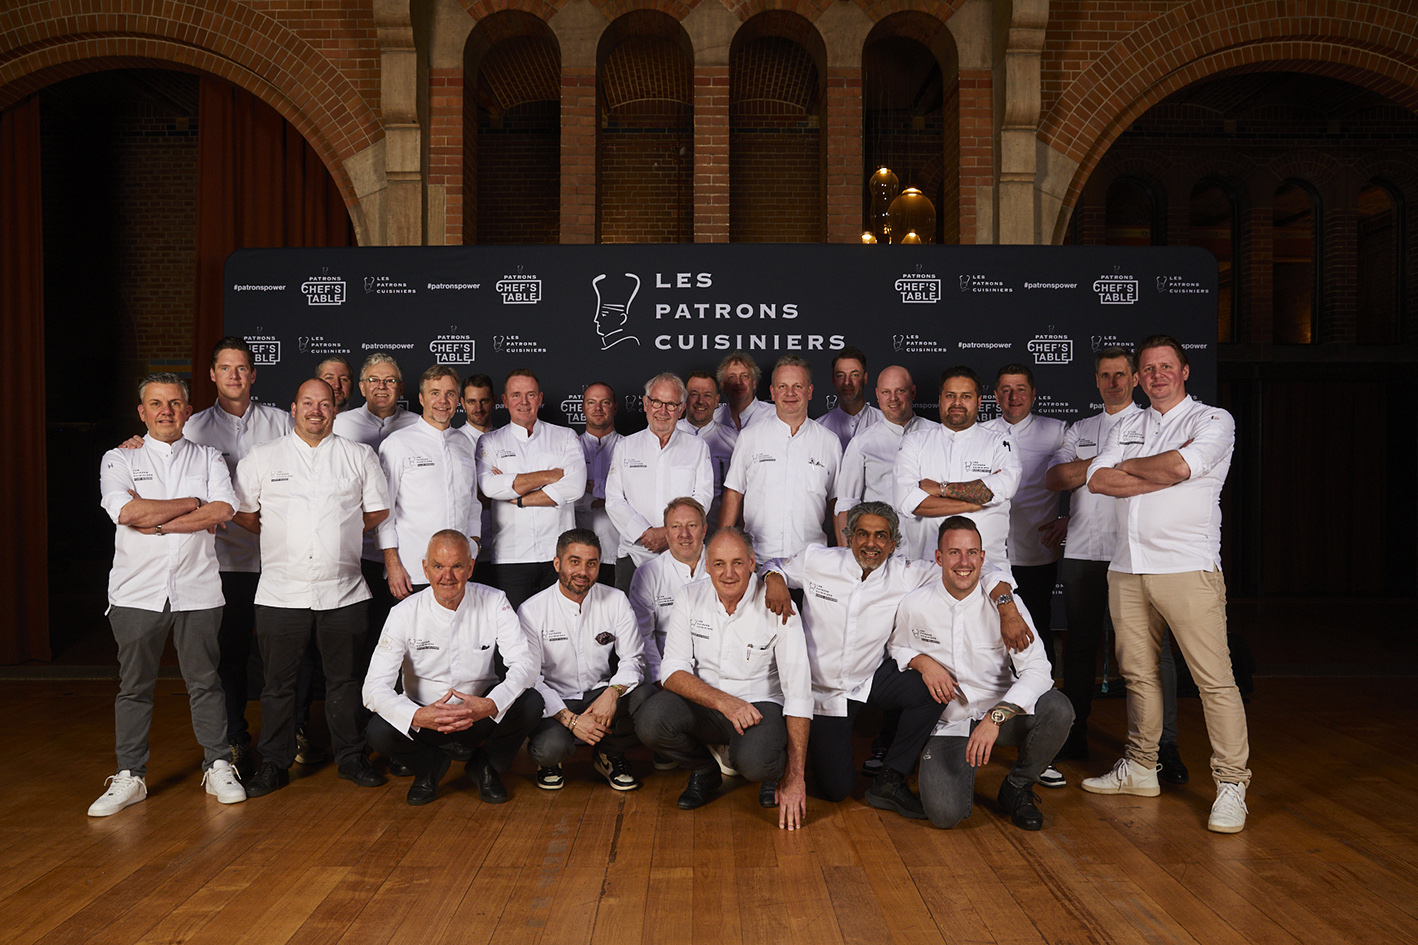 De 25 leden van Les Patrons Cuisiniers